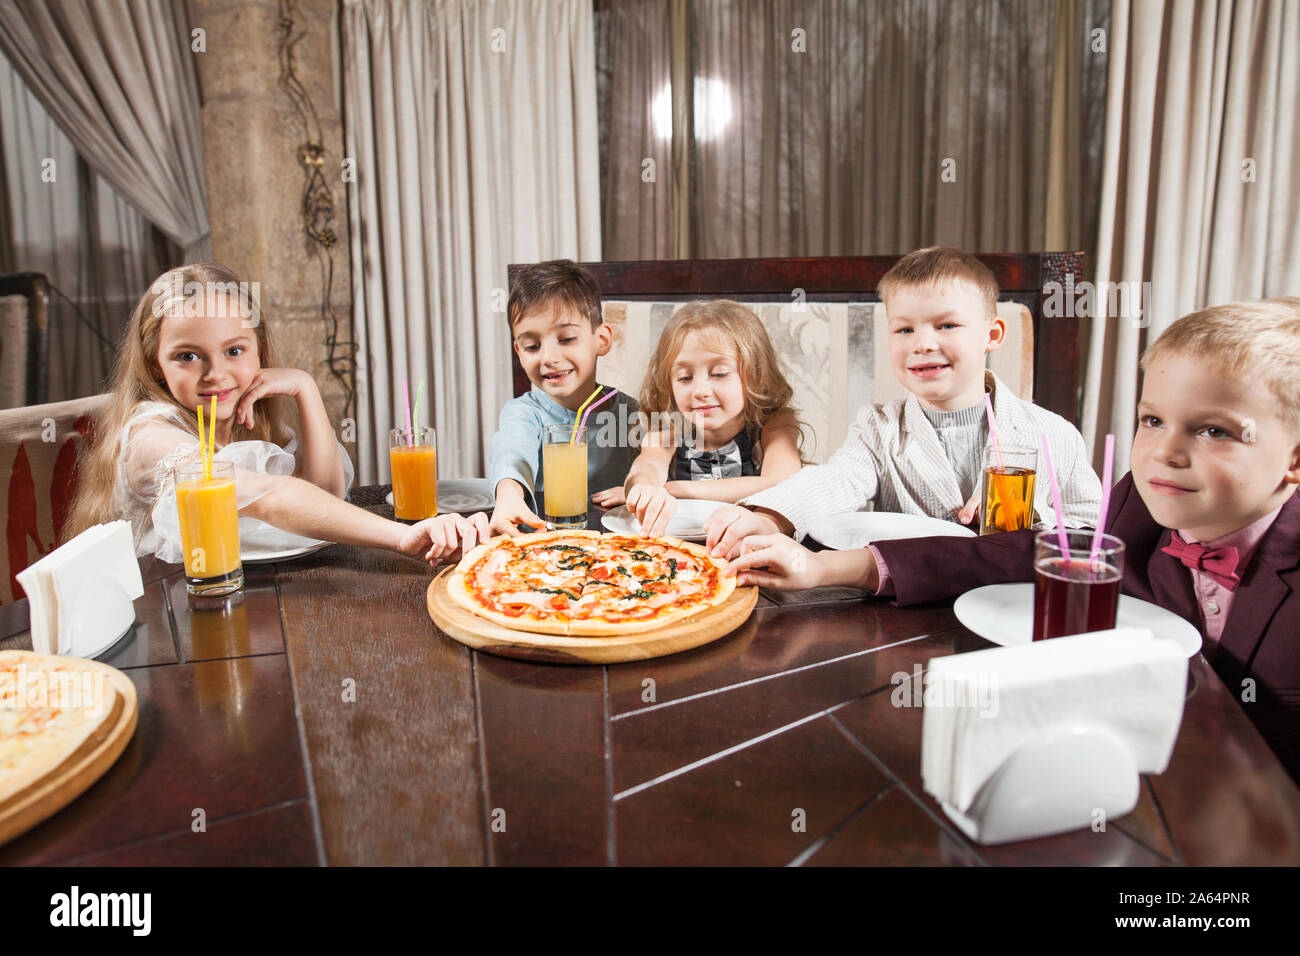 children eat pizza in a restaurant Stock Photo